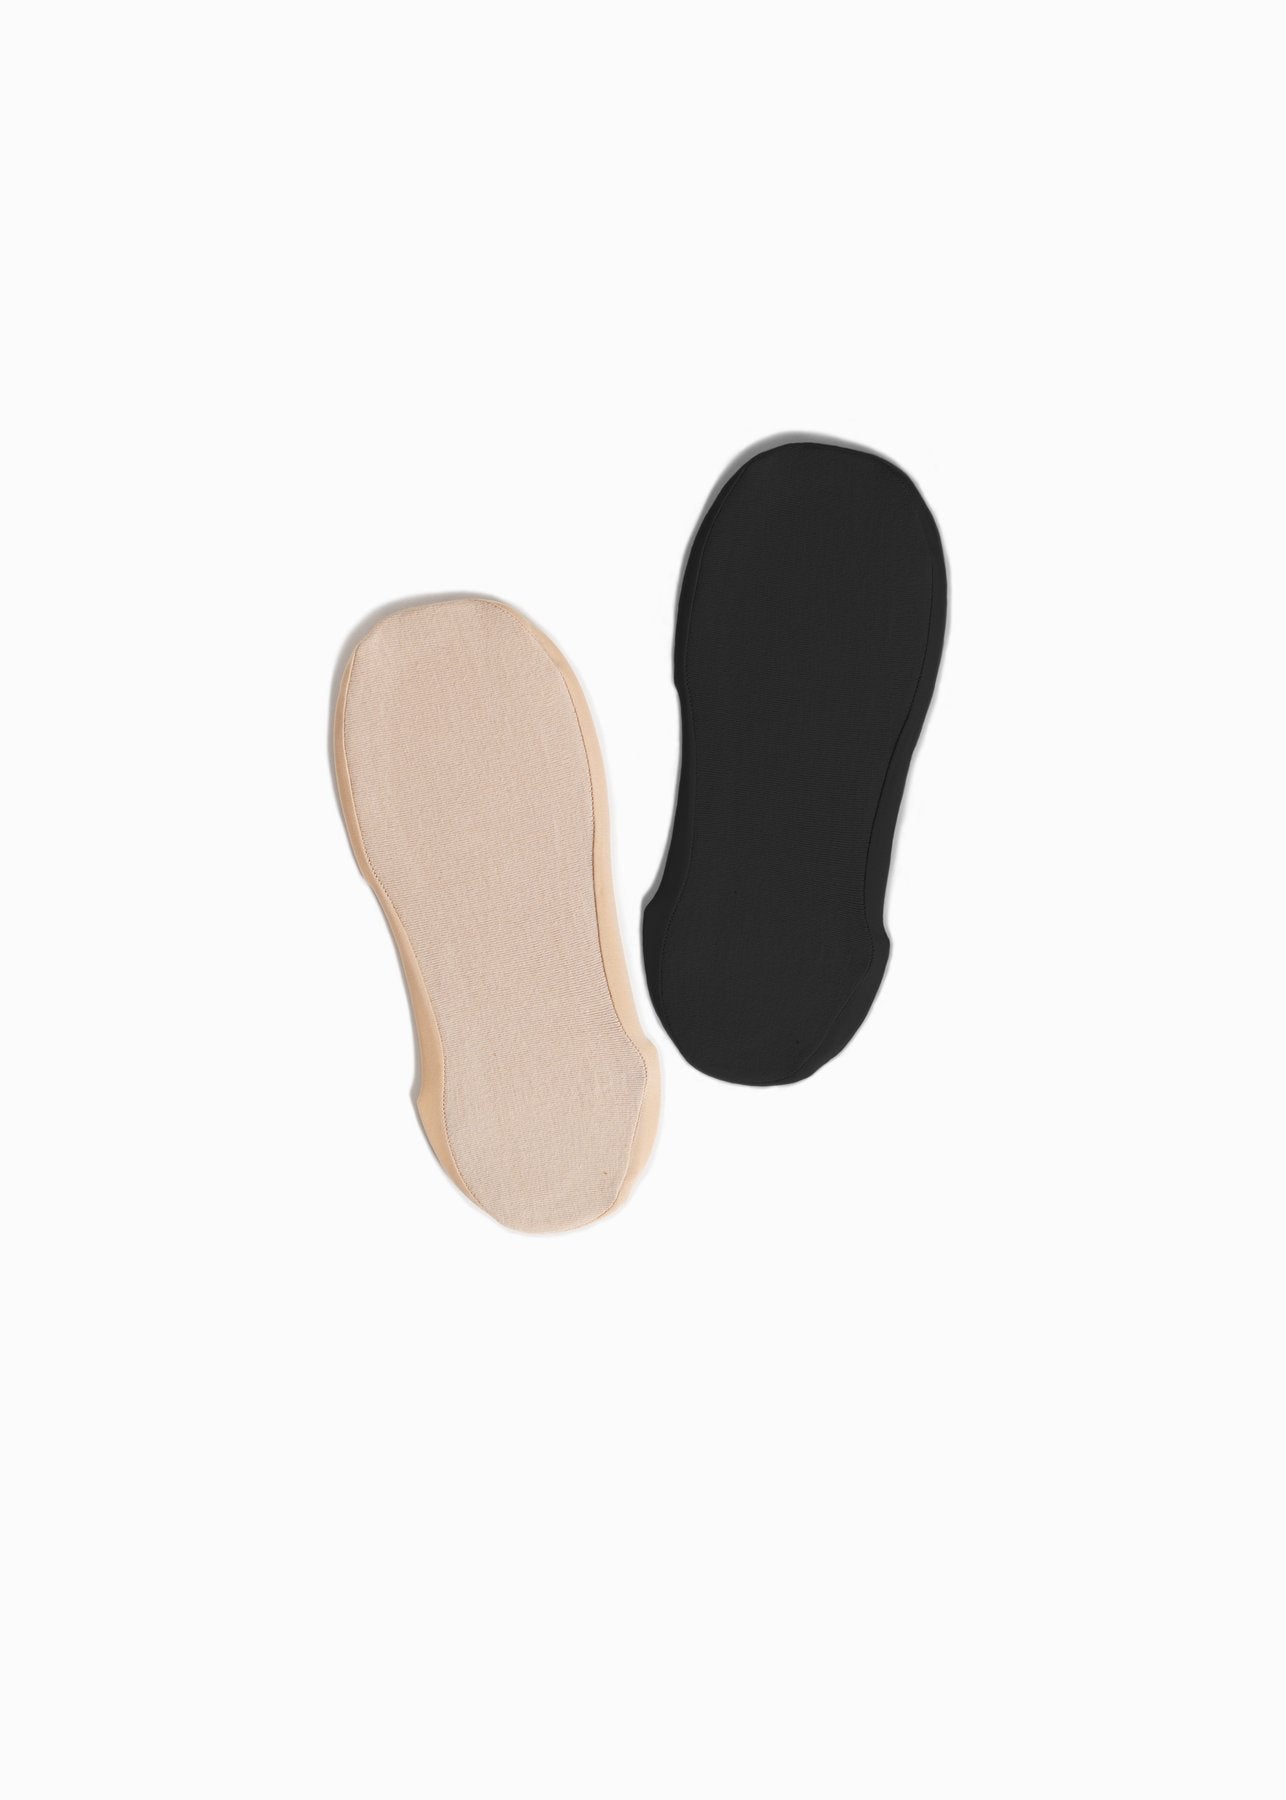 Basic Lightweight Foot Liner Socks - FINAL SALE Accessories Black